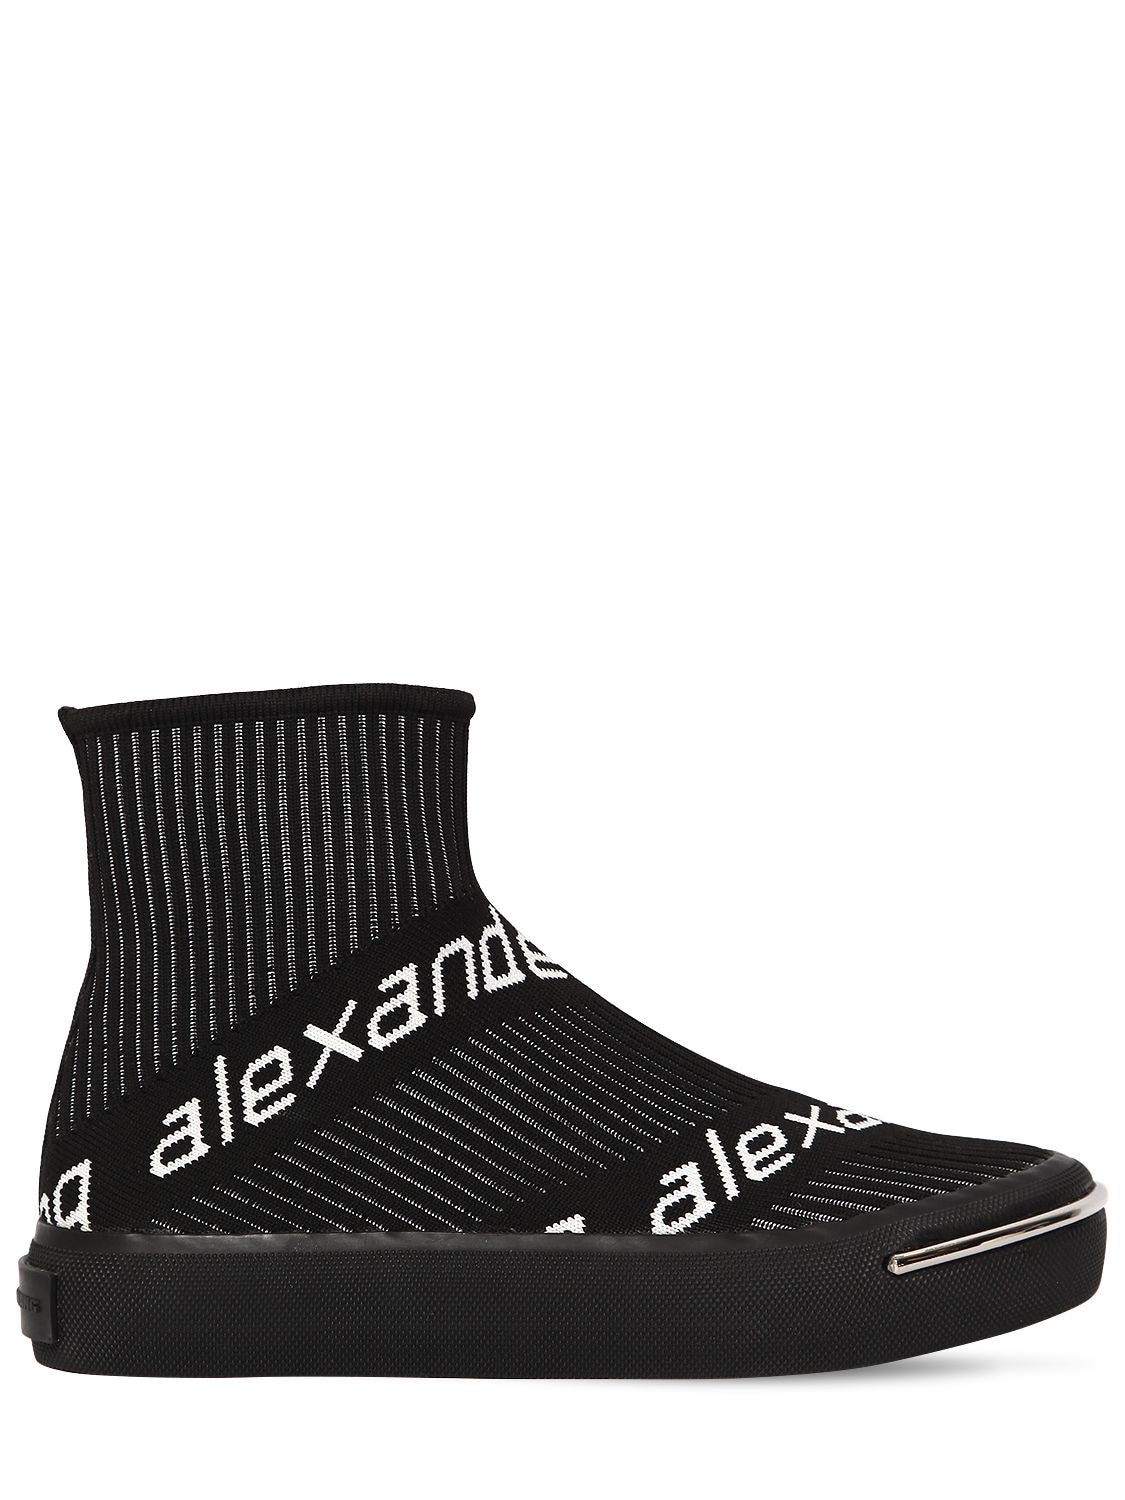 ALEXANDER WANG 20毫米"PIA"LOGO针织袜子运动鞋,69IVMT001-MDAX0